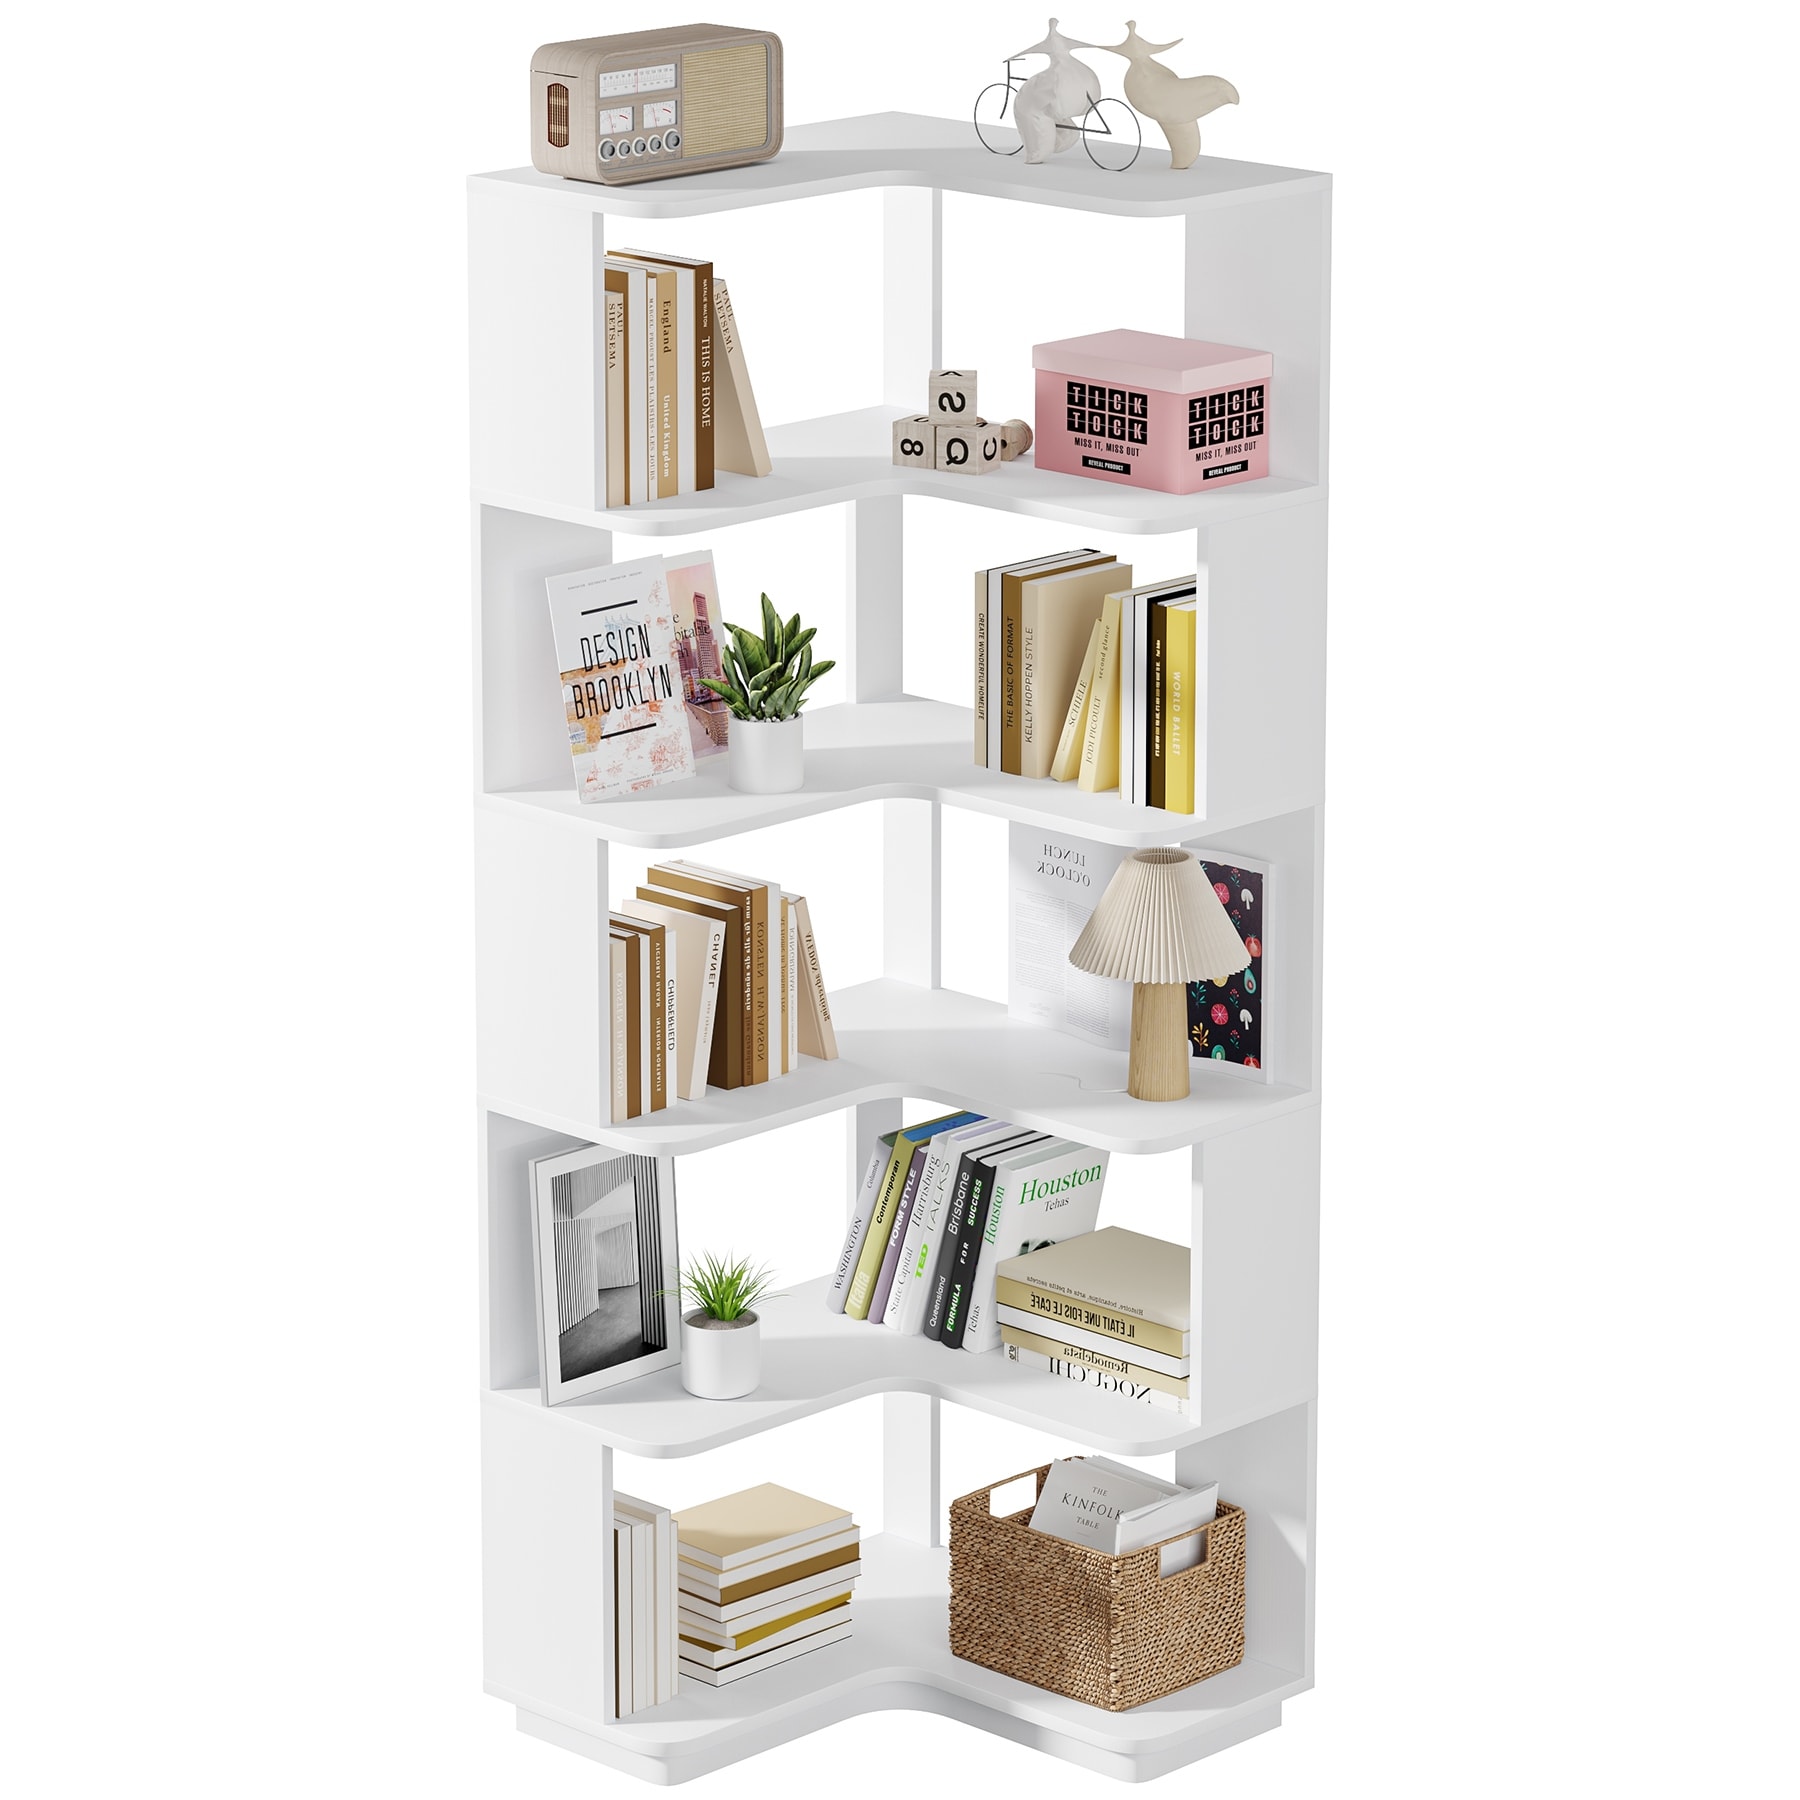 6-Tier Corner Book Shelf, 64.9"Tall Freestanding Wood Industrial Bookcase Bookshelf